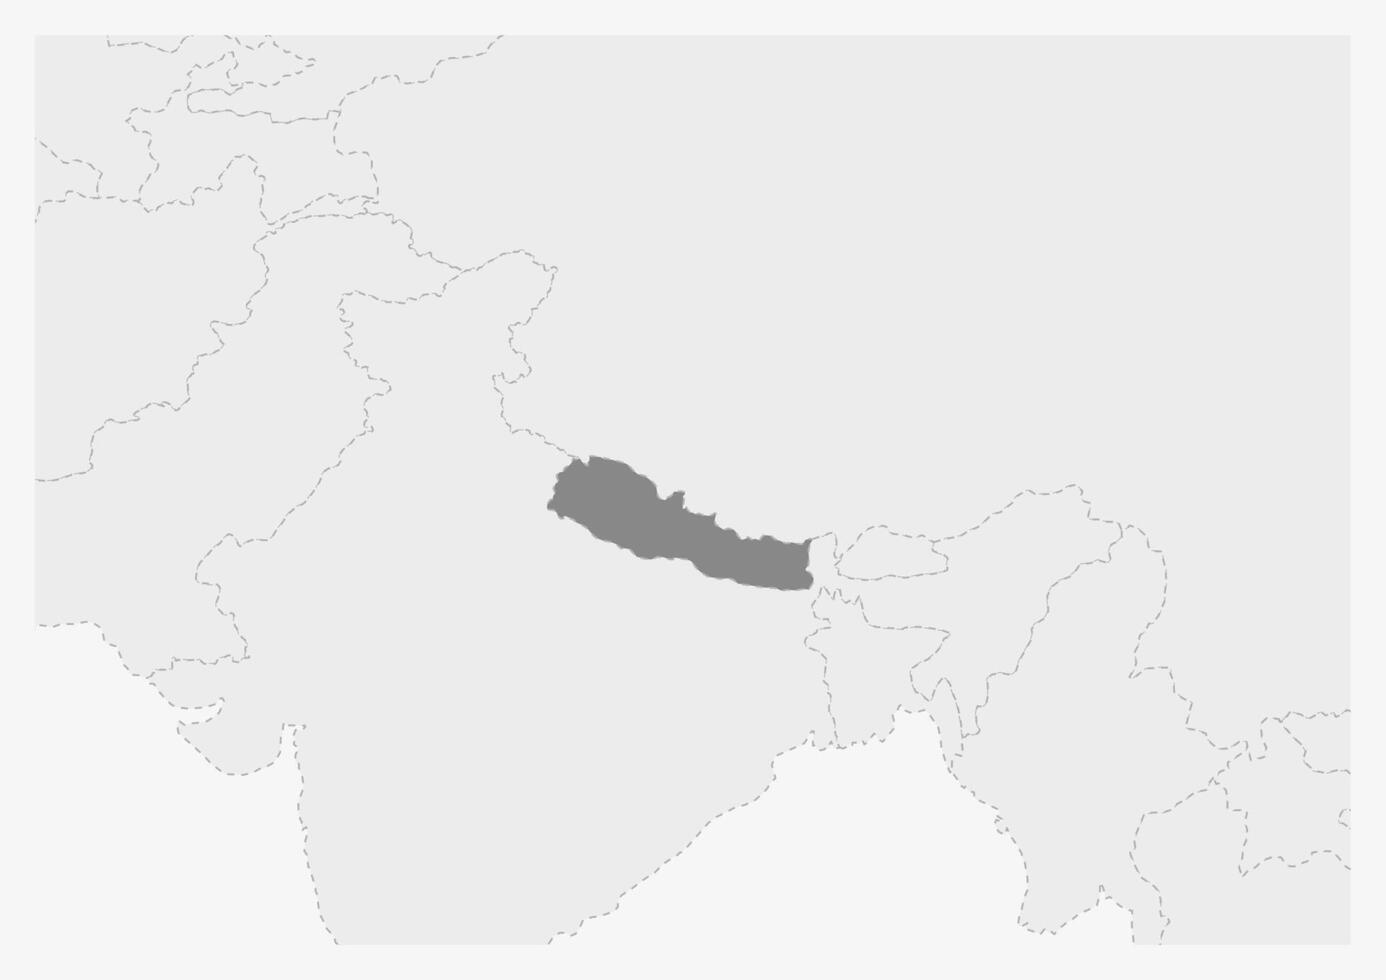 kaart van Azië met gemarkeerd Nepal kaart vector